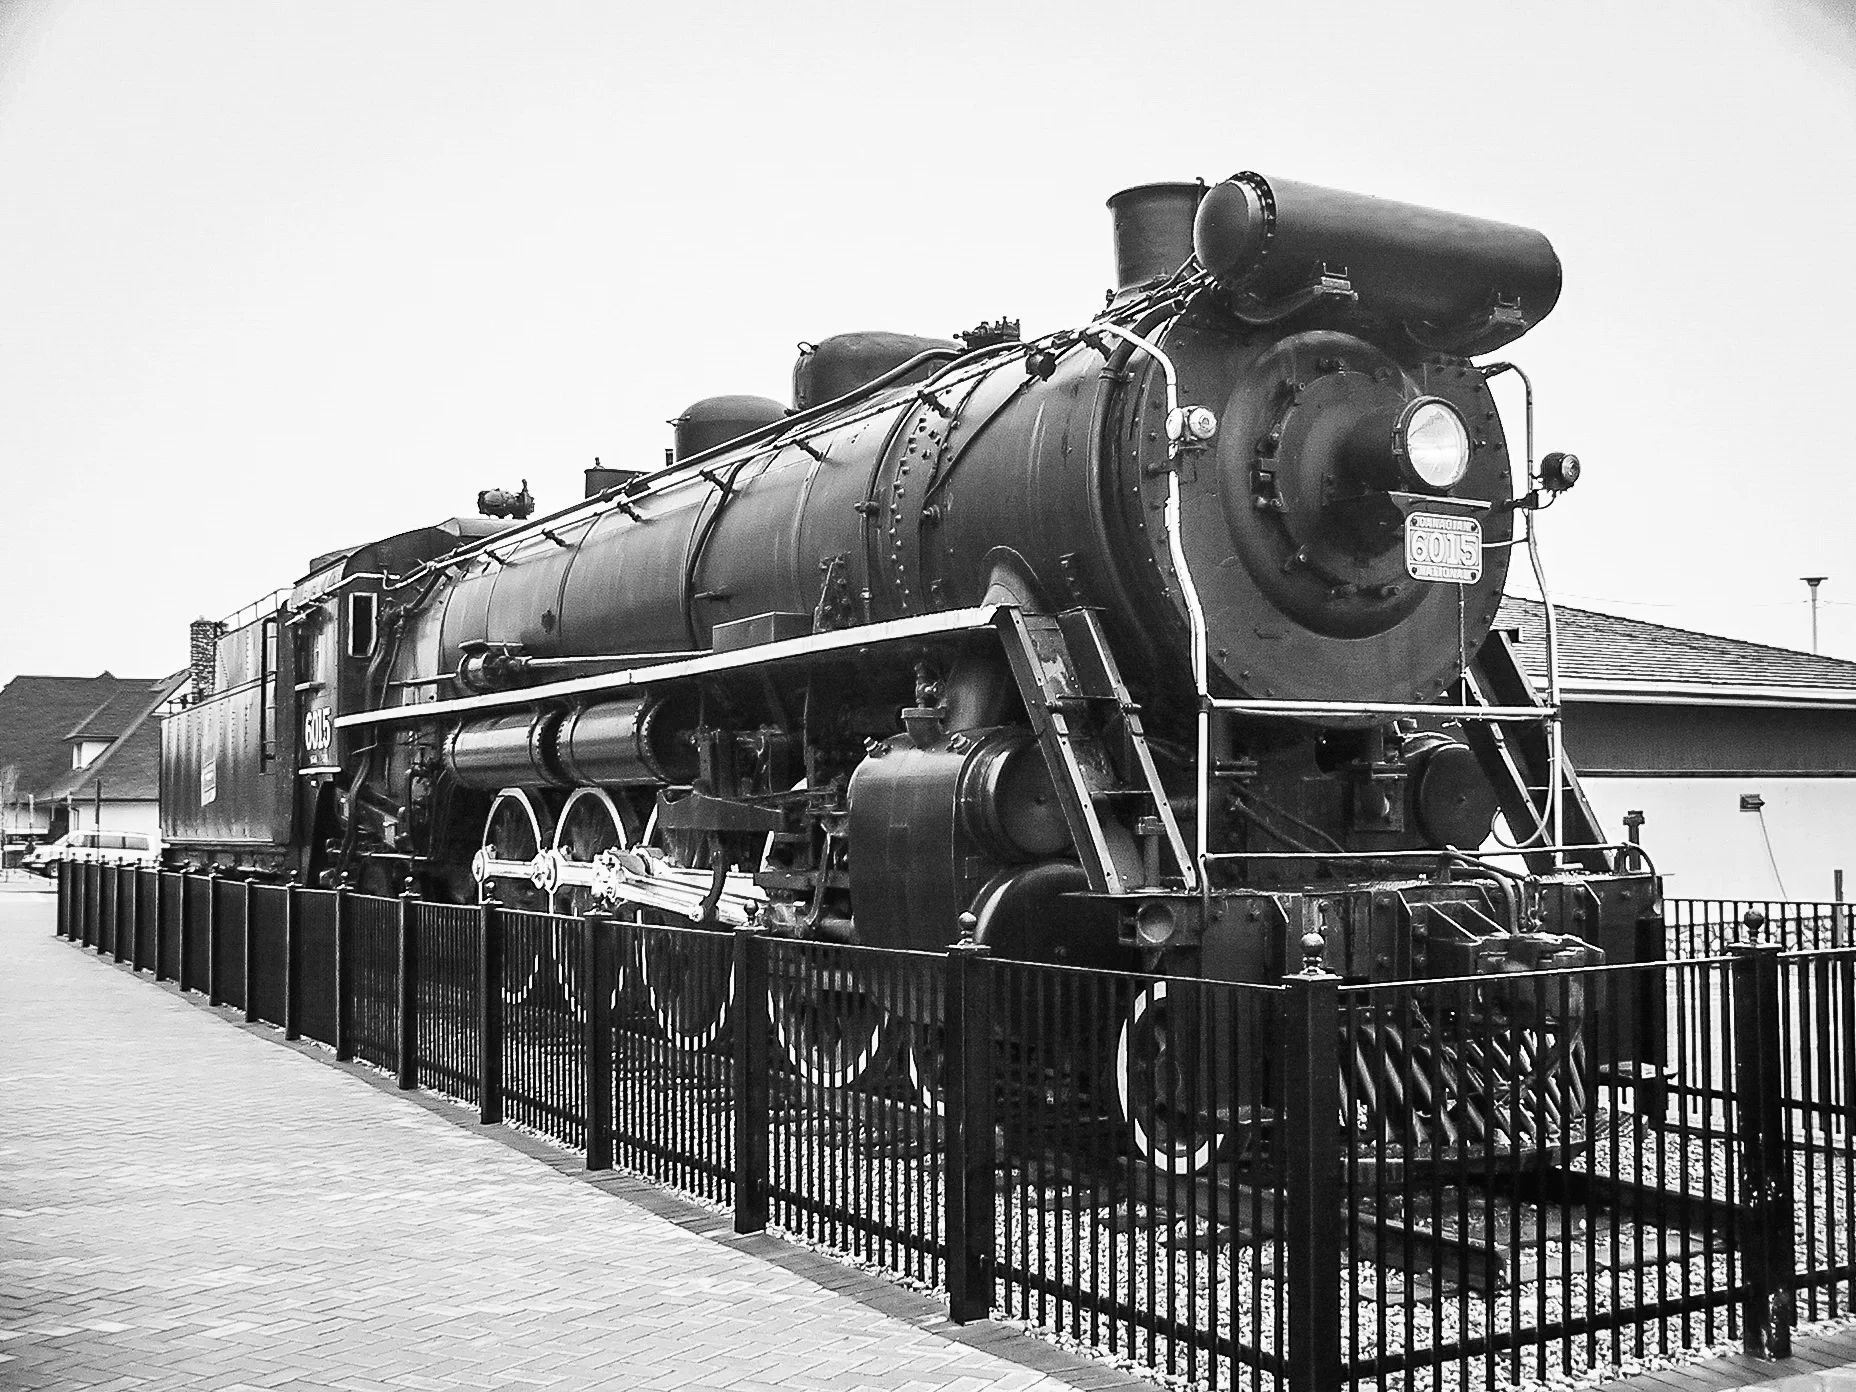 CN 6015 on display in Jasper